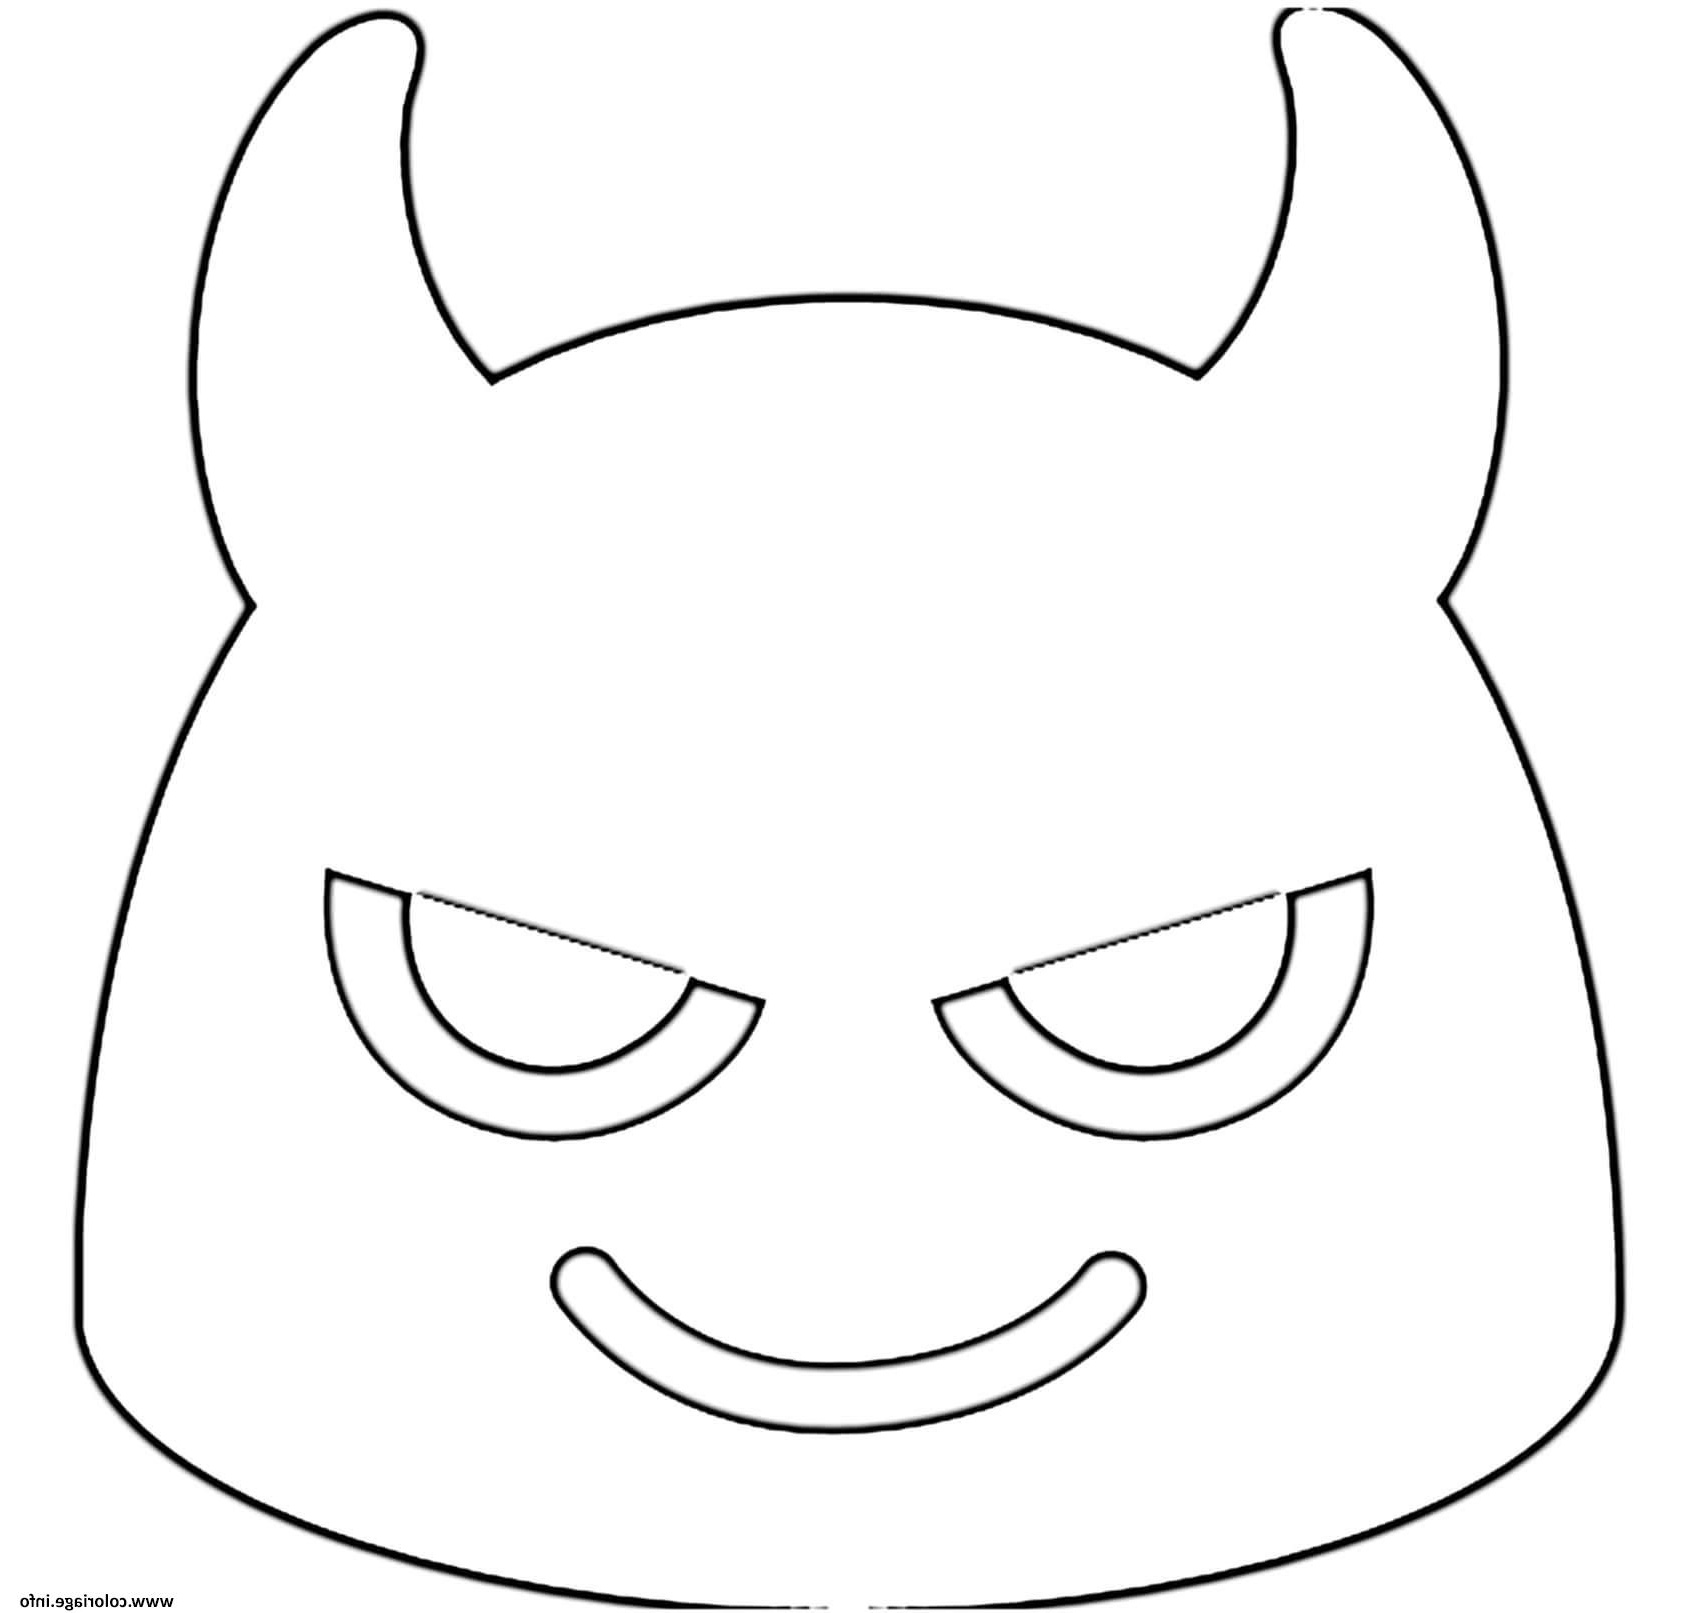 Dessin A Colorier Emoji Nouveau Photographie Coloriage Google Emoji Devil Dessin